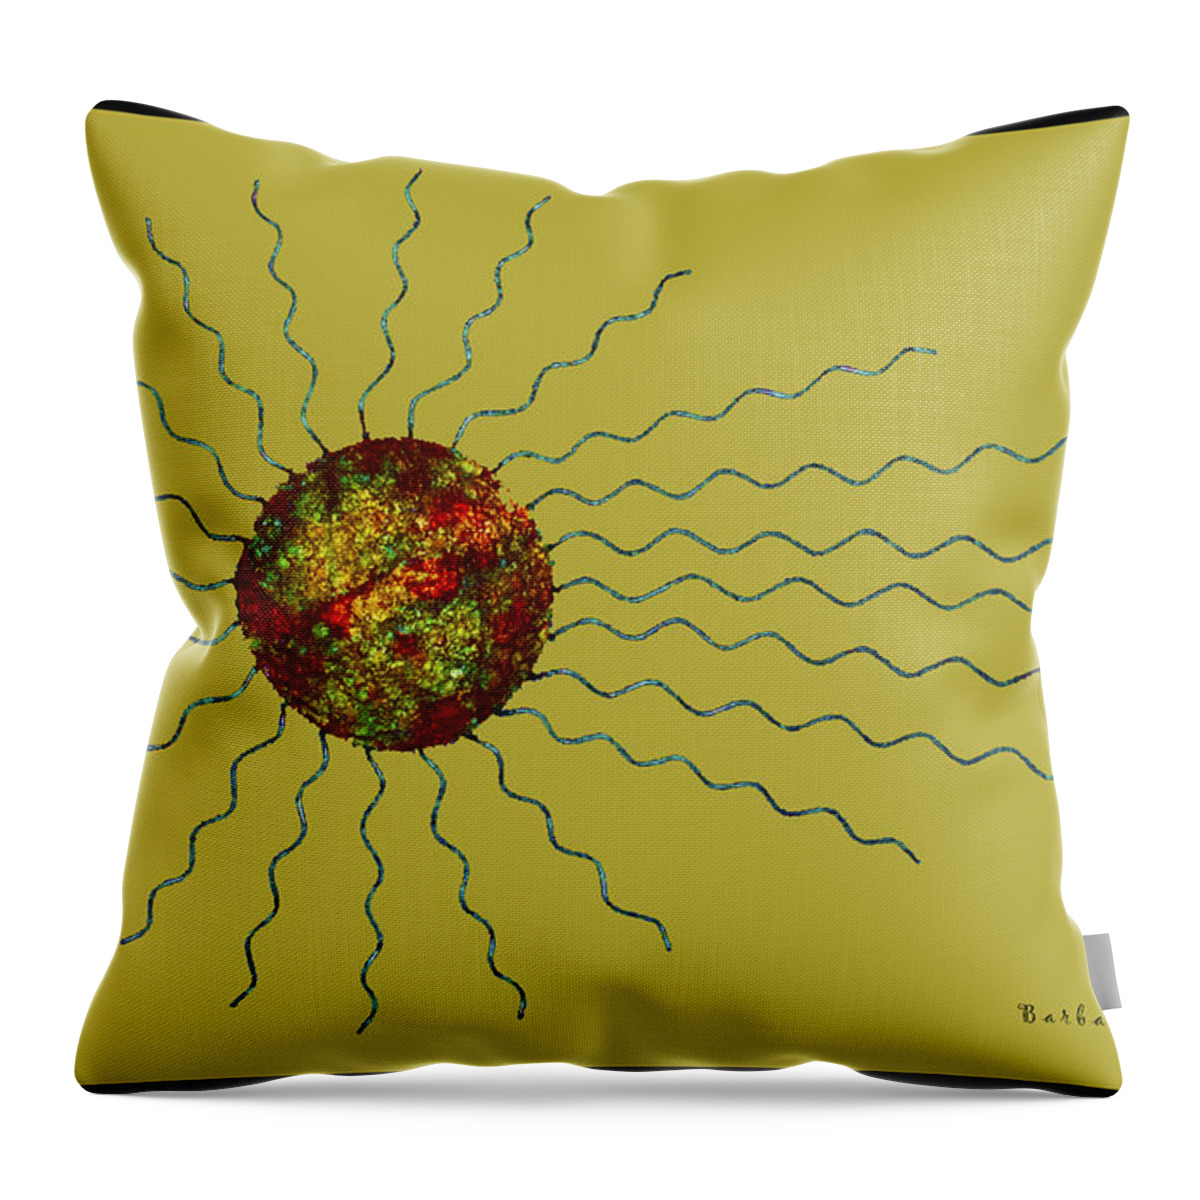 Abstract Sunburst On Green Throw Pillow featuring the digital art Abstract Sunburst On Green by Barbara Snyder